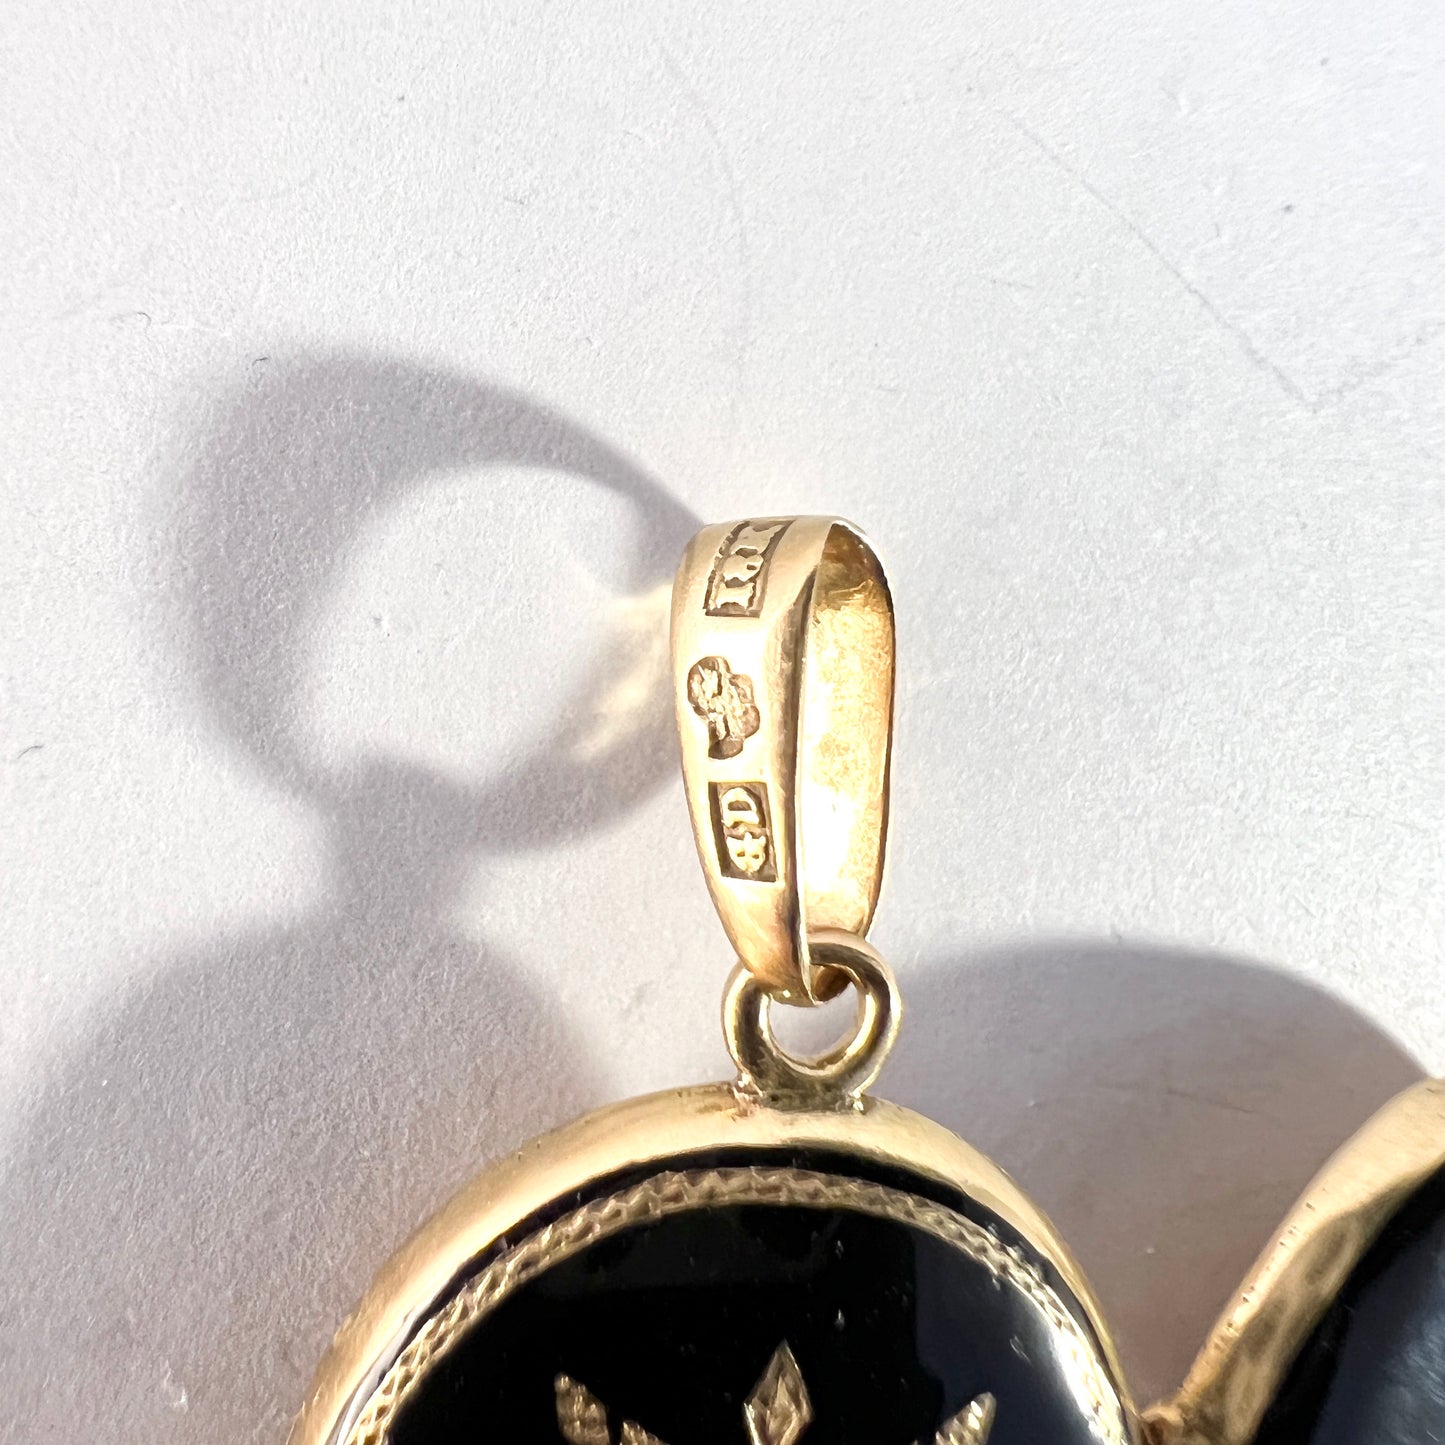 G Dahlgren, Sweden 1868. Victorian 18k Gold Enamel Rose Cut Diamonds Locket Pendant.